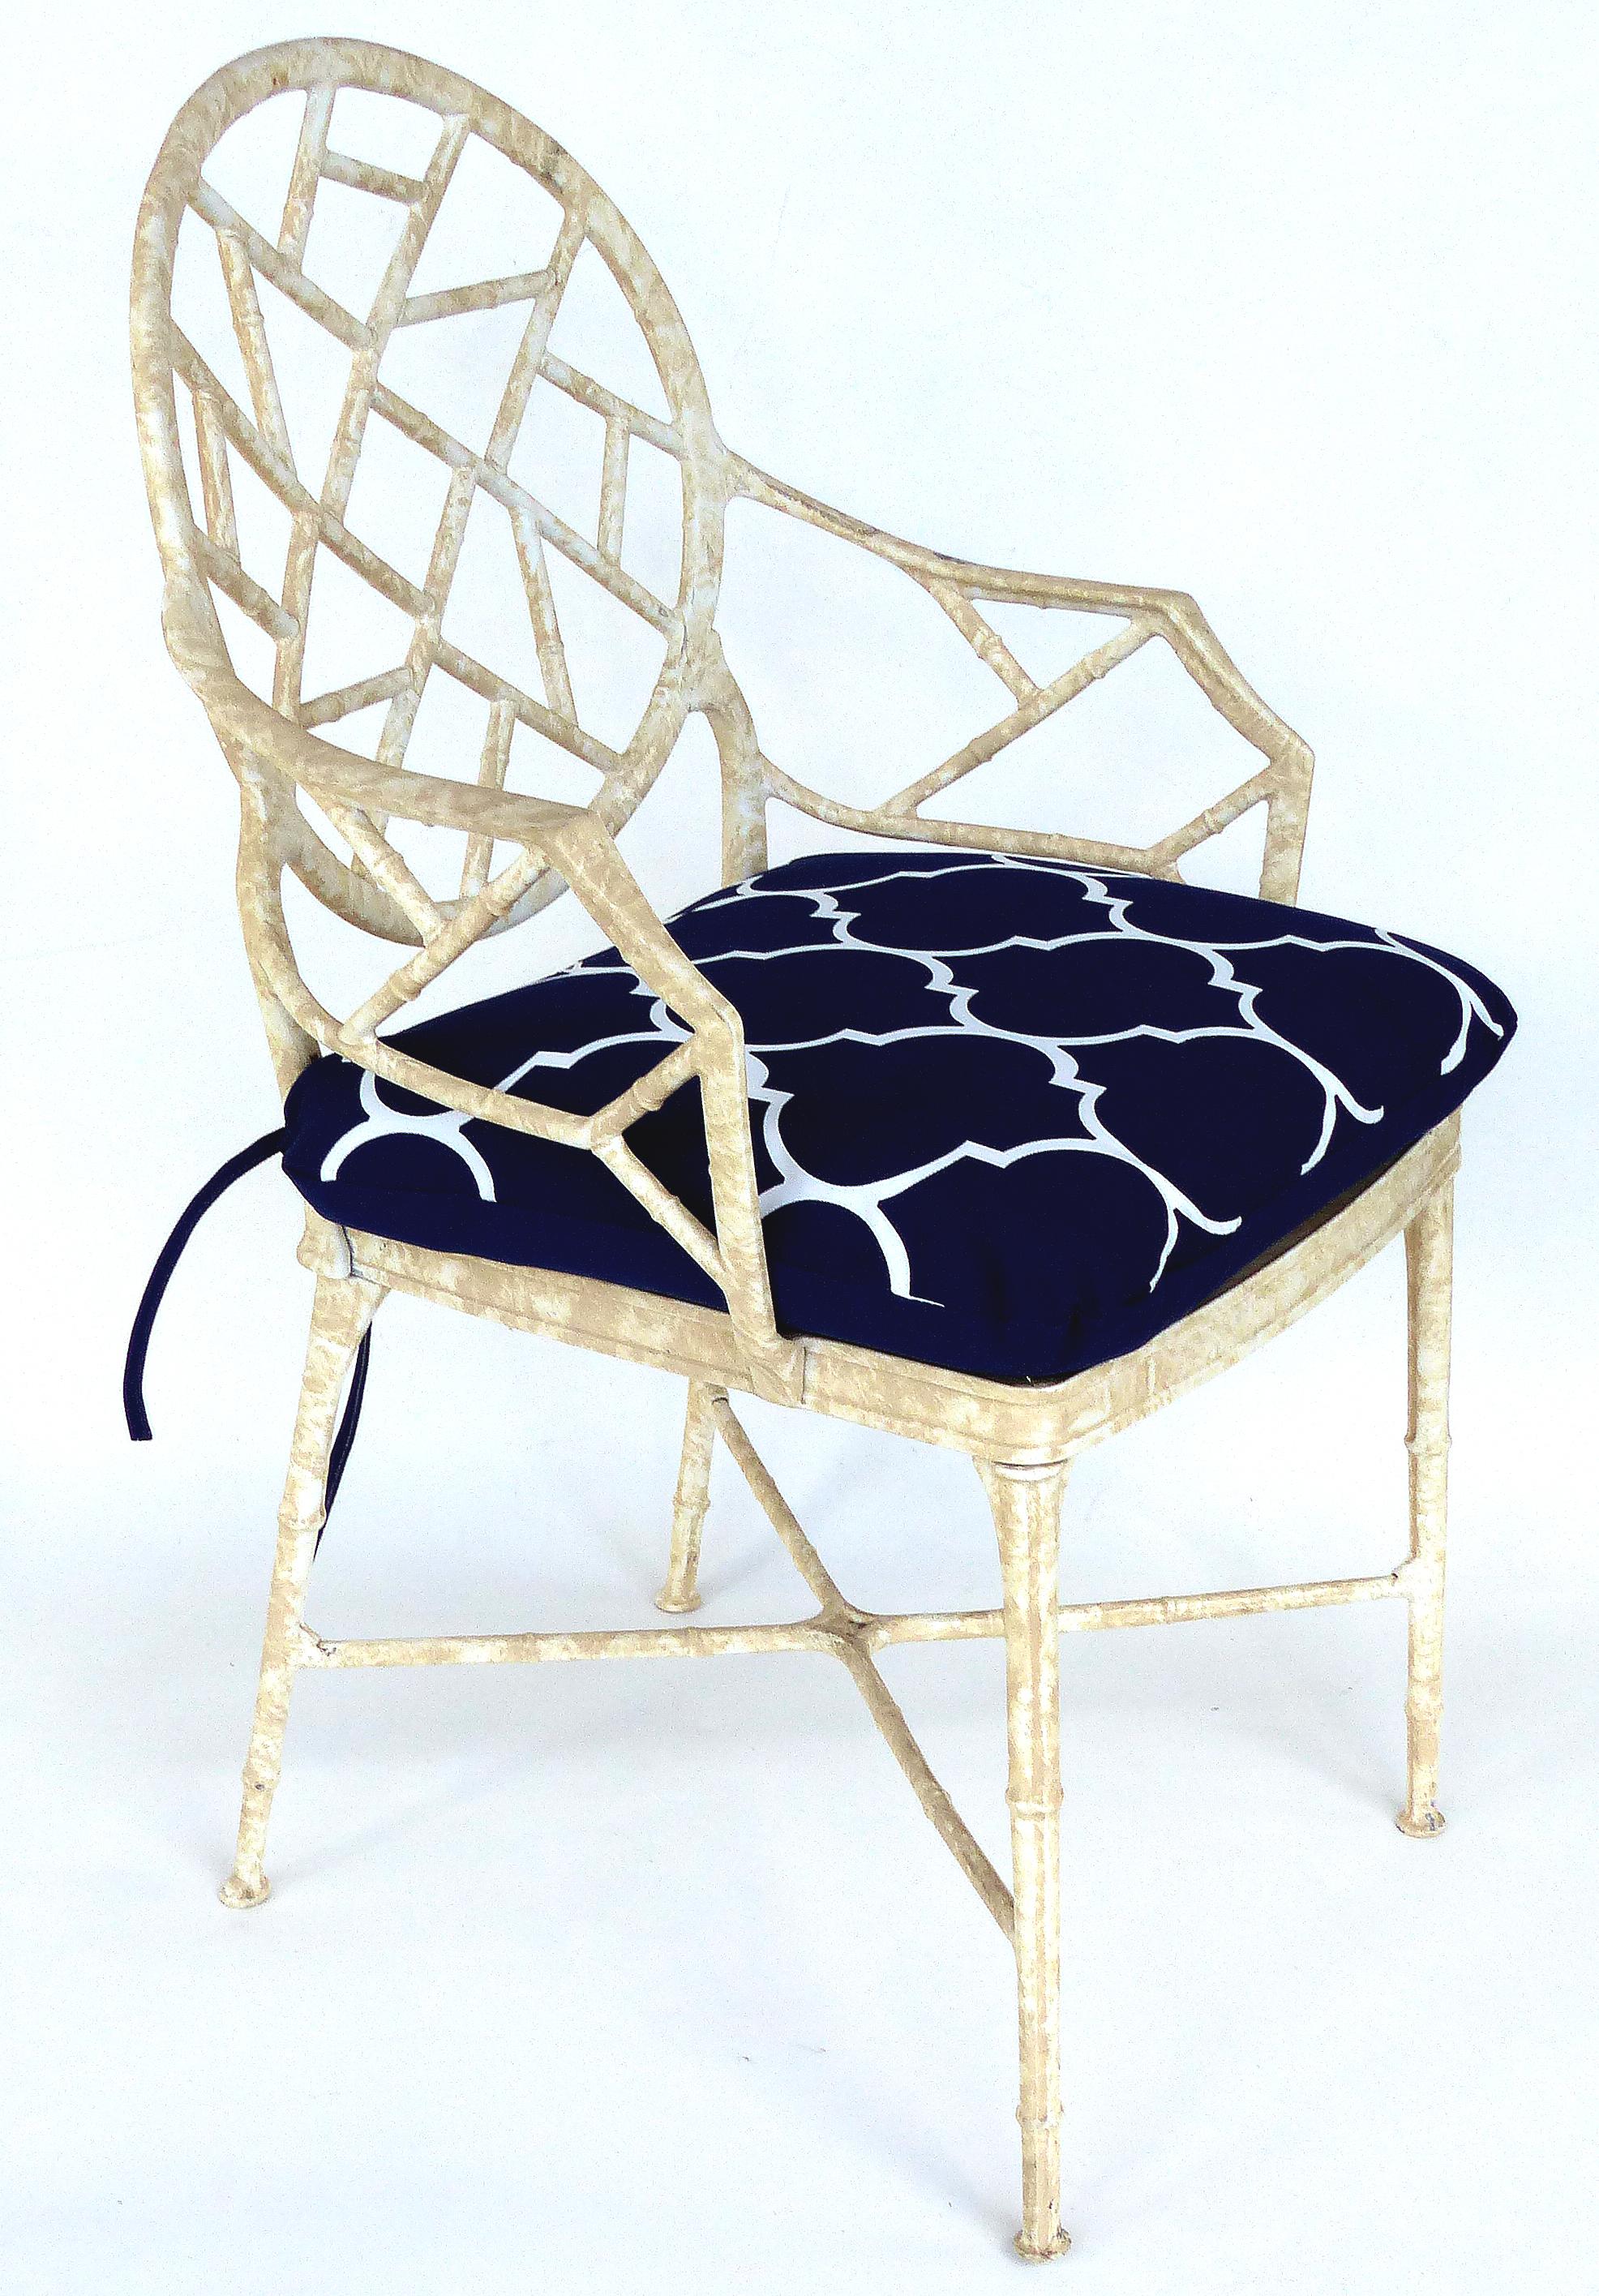 American Aluminium Lattice Motif Garden Chairs with Loose Seat Cushions, Set of 4